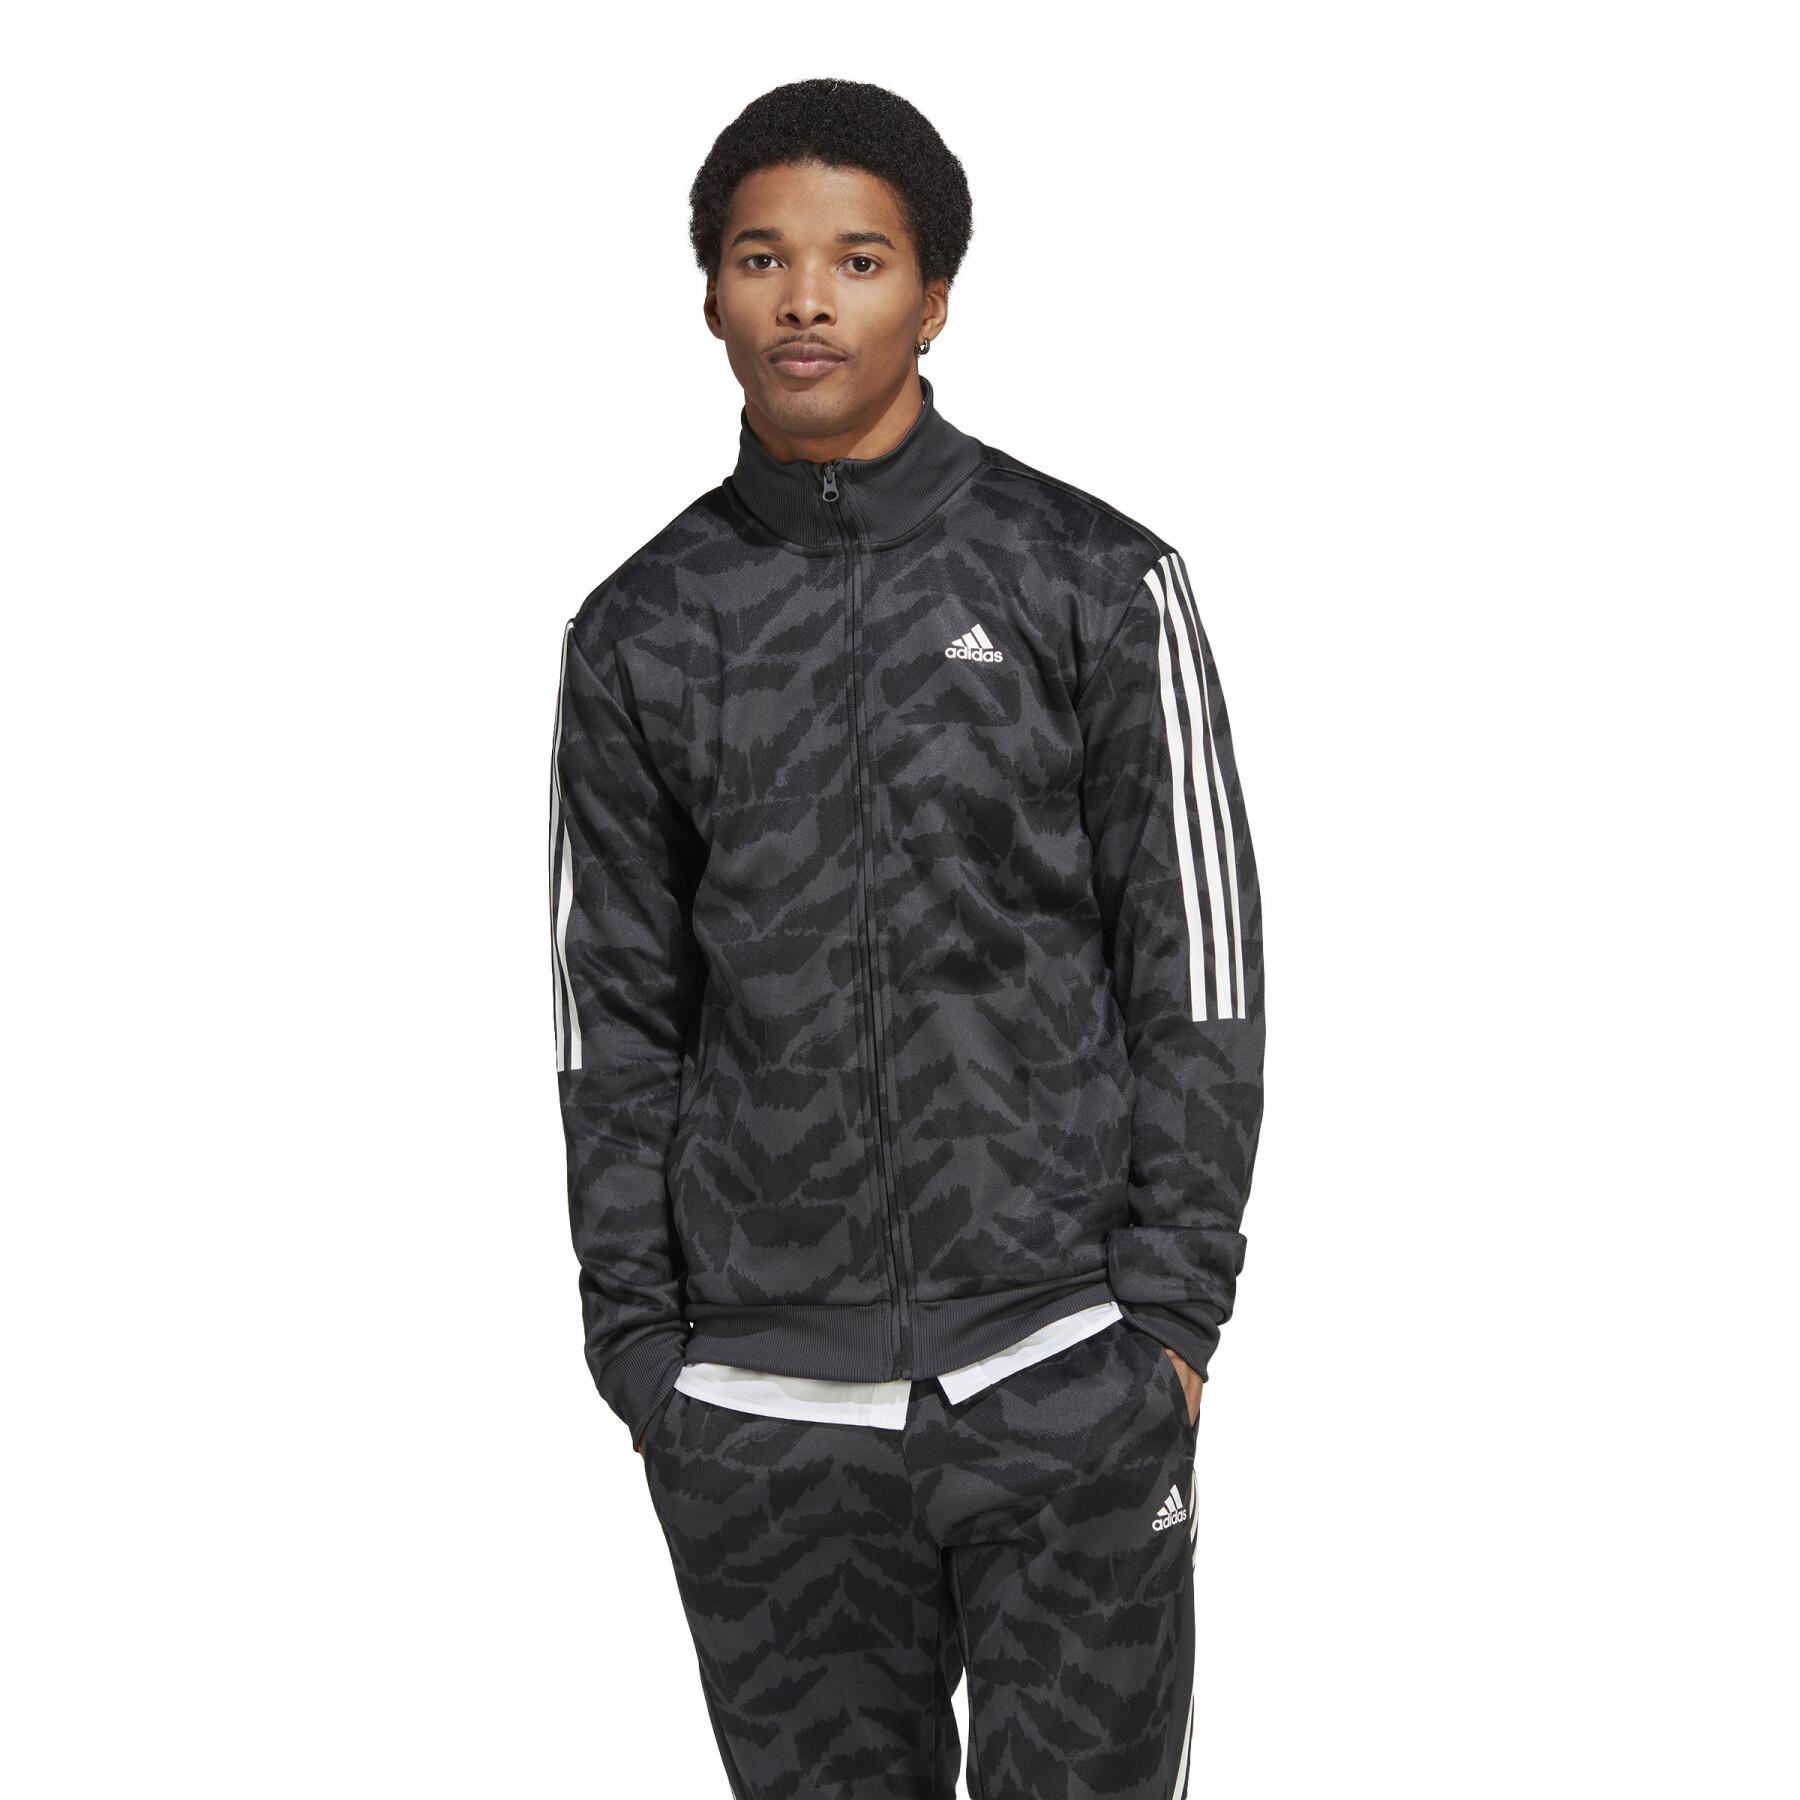 Tiro Jackets adidas Sweat Handball - Suit-Up jacket Textile and wear - tracksuits -